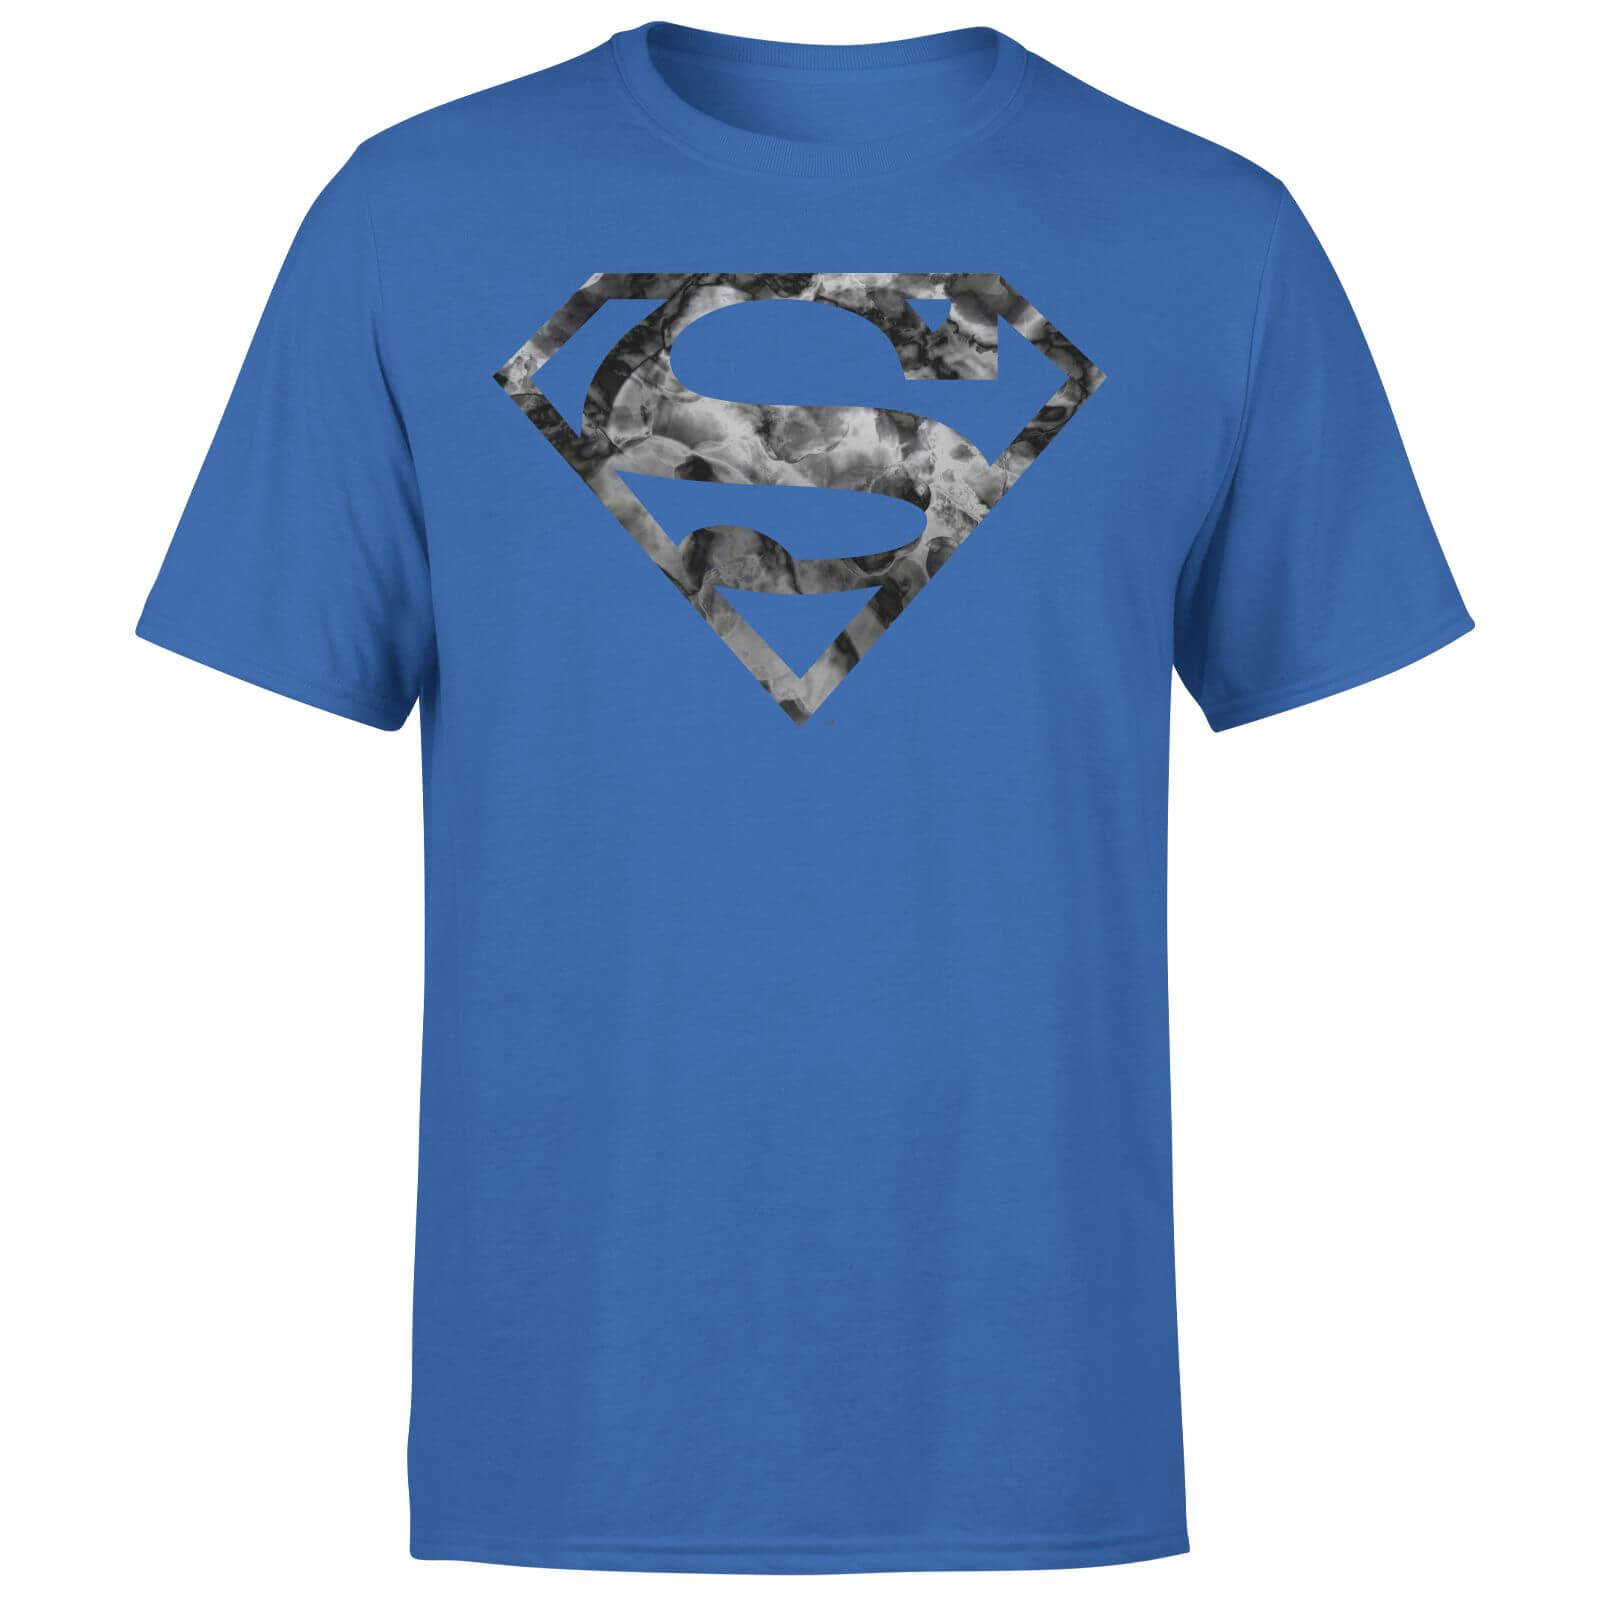 Marble Superman Logo Men's T-Shirt - Blue - S - Blue